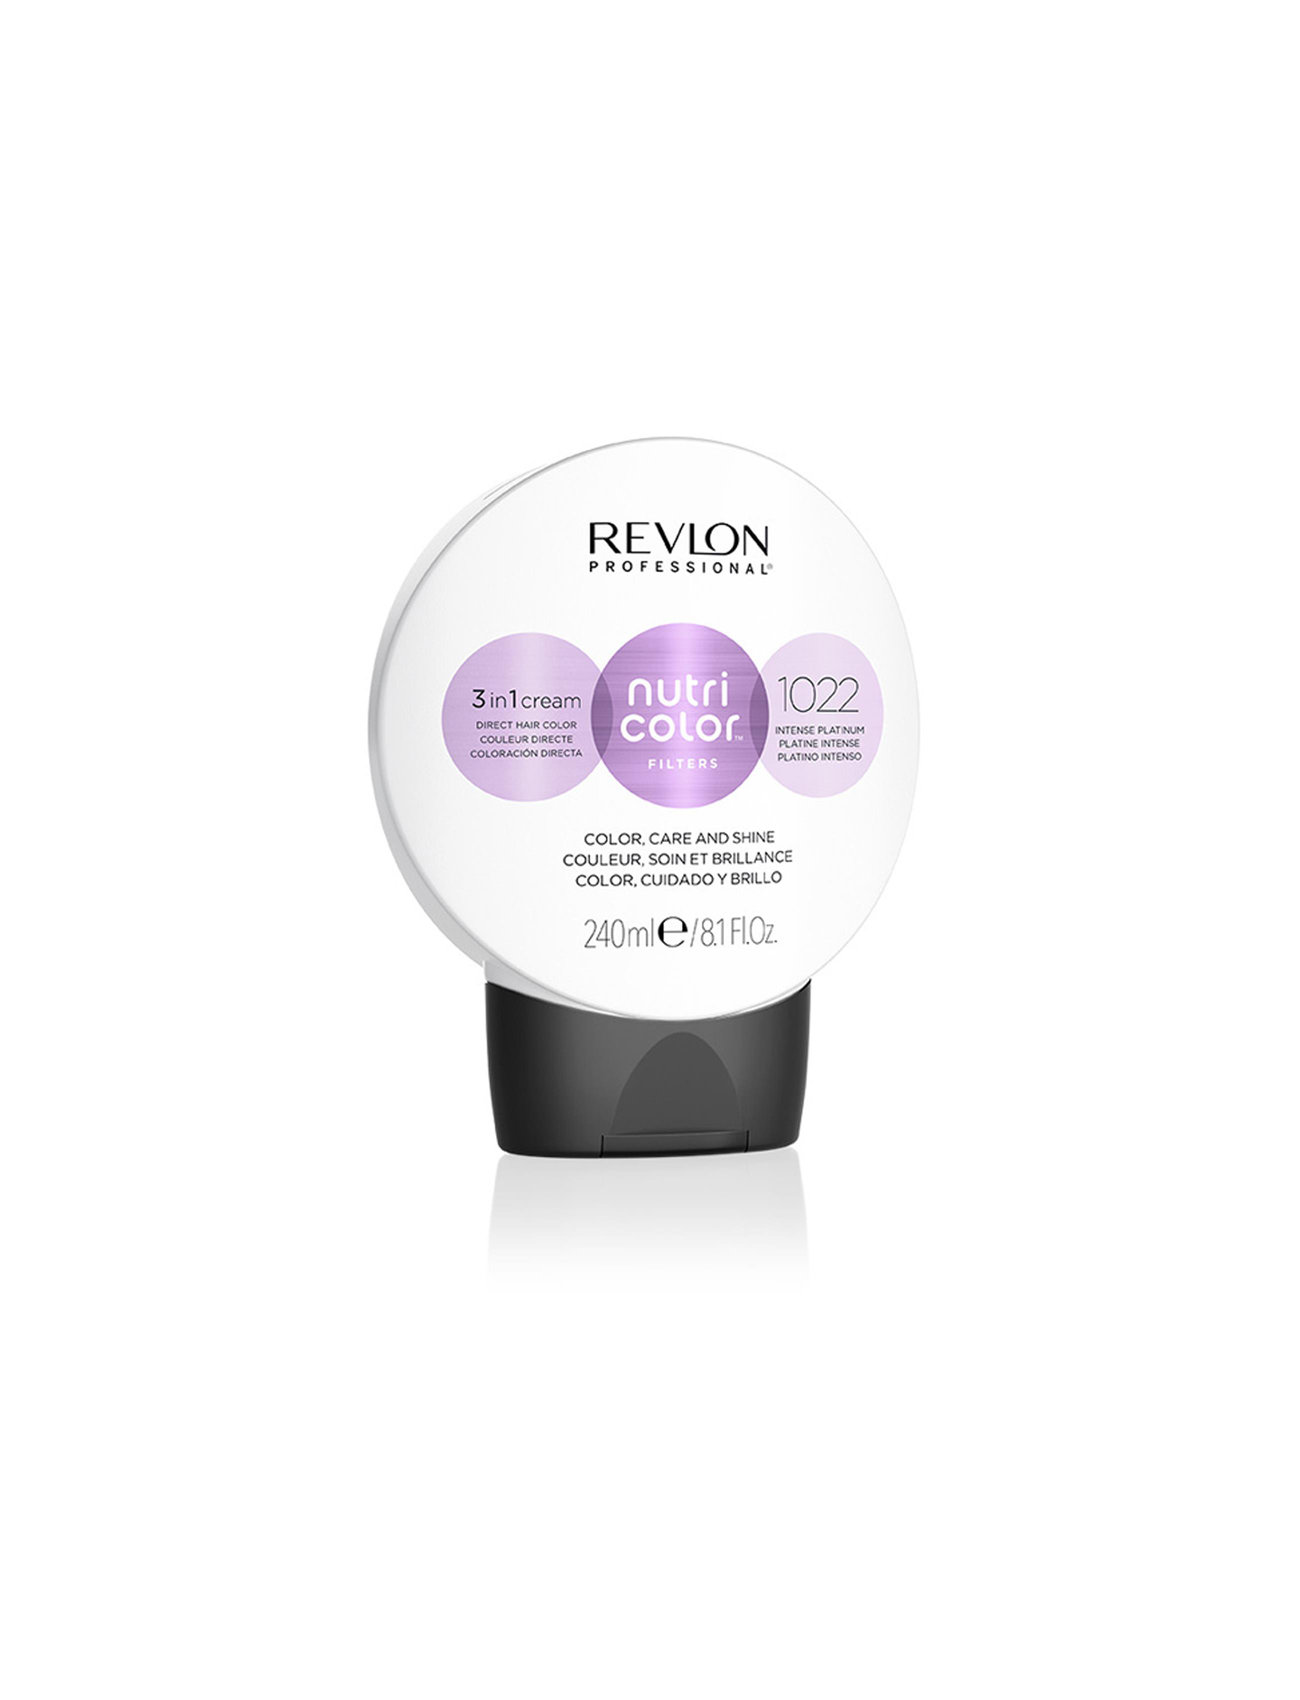 "Revlon Professional" "Nutri Color Filters 240Ml 1022 Beauty Women Hair Care Treatments Nude Revlon